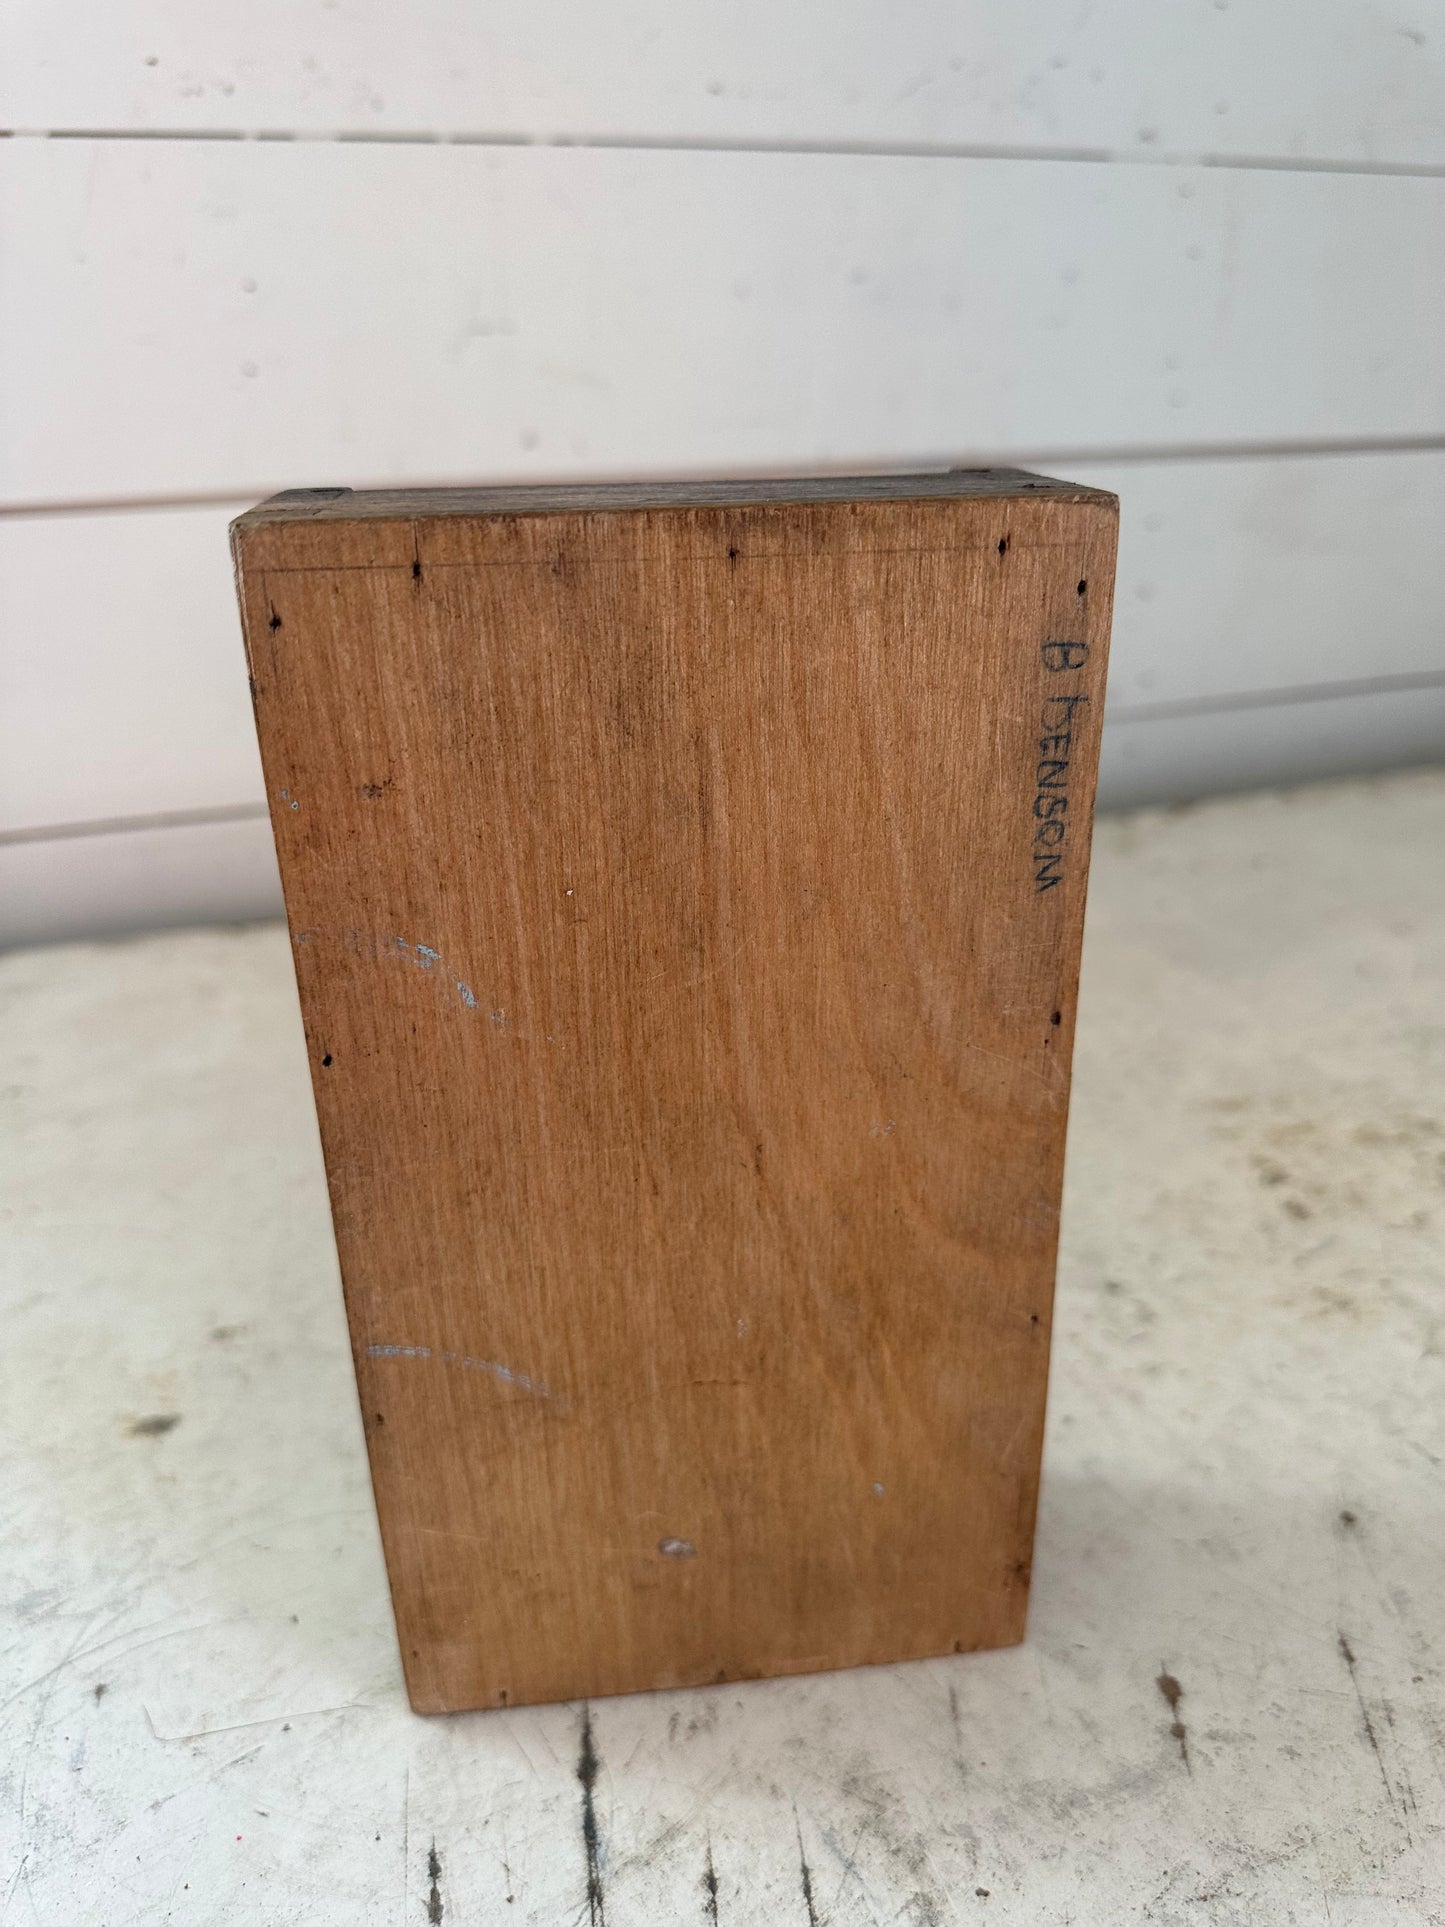 Antique wooden Spice Box